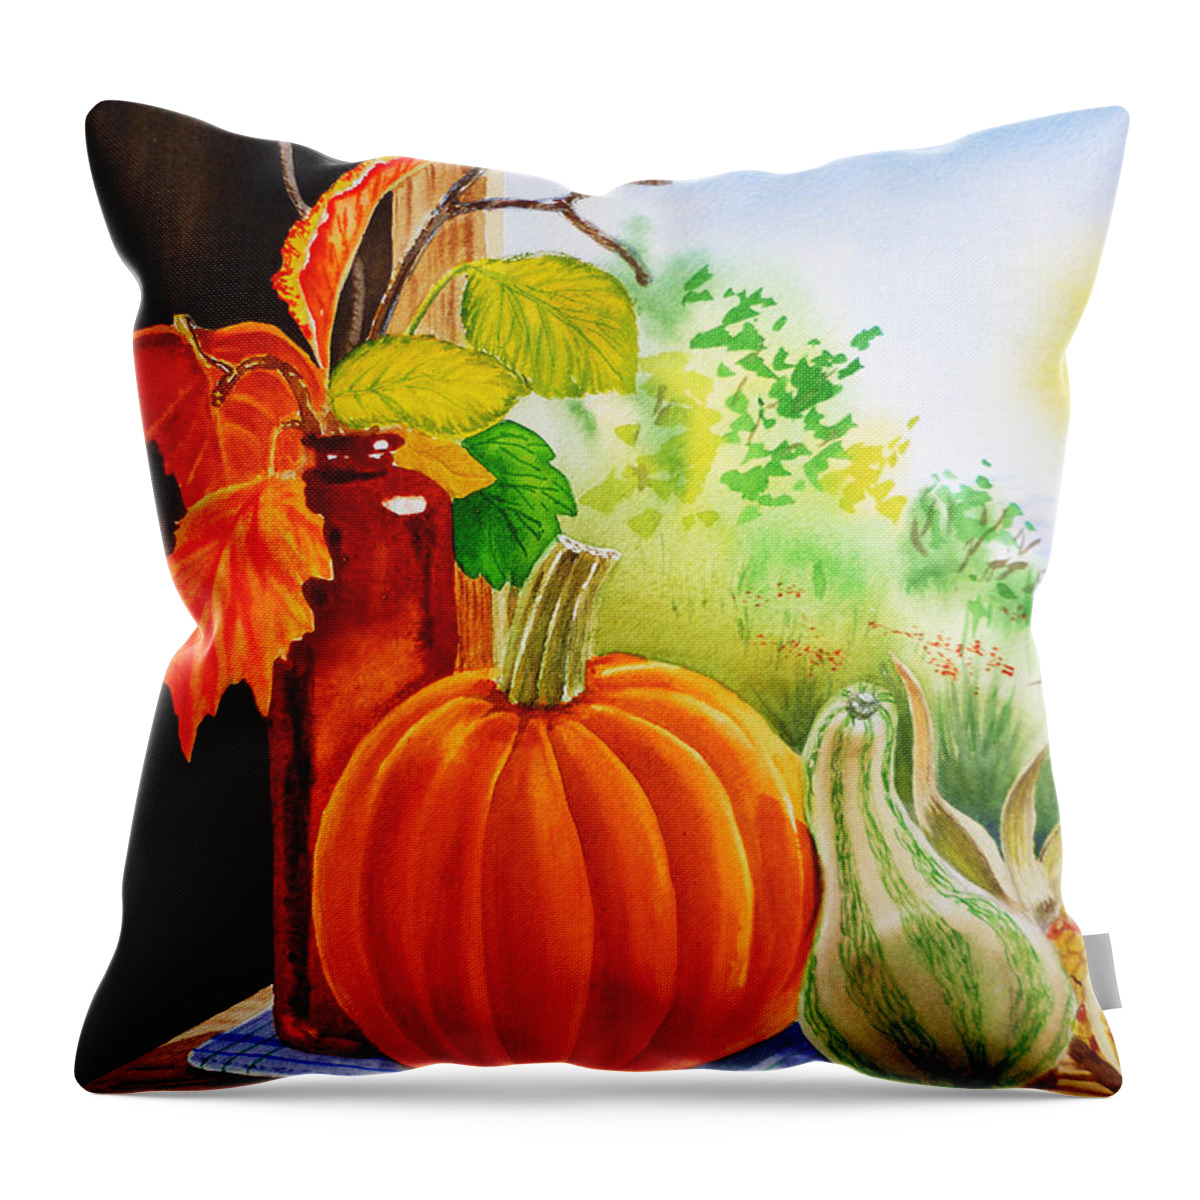 Autumn Throw Pillow featuring the painting Fall Leaves Pumpkin Gourd by Irina Sztukowski